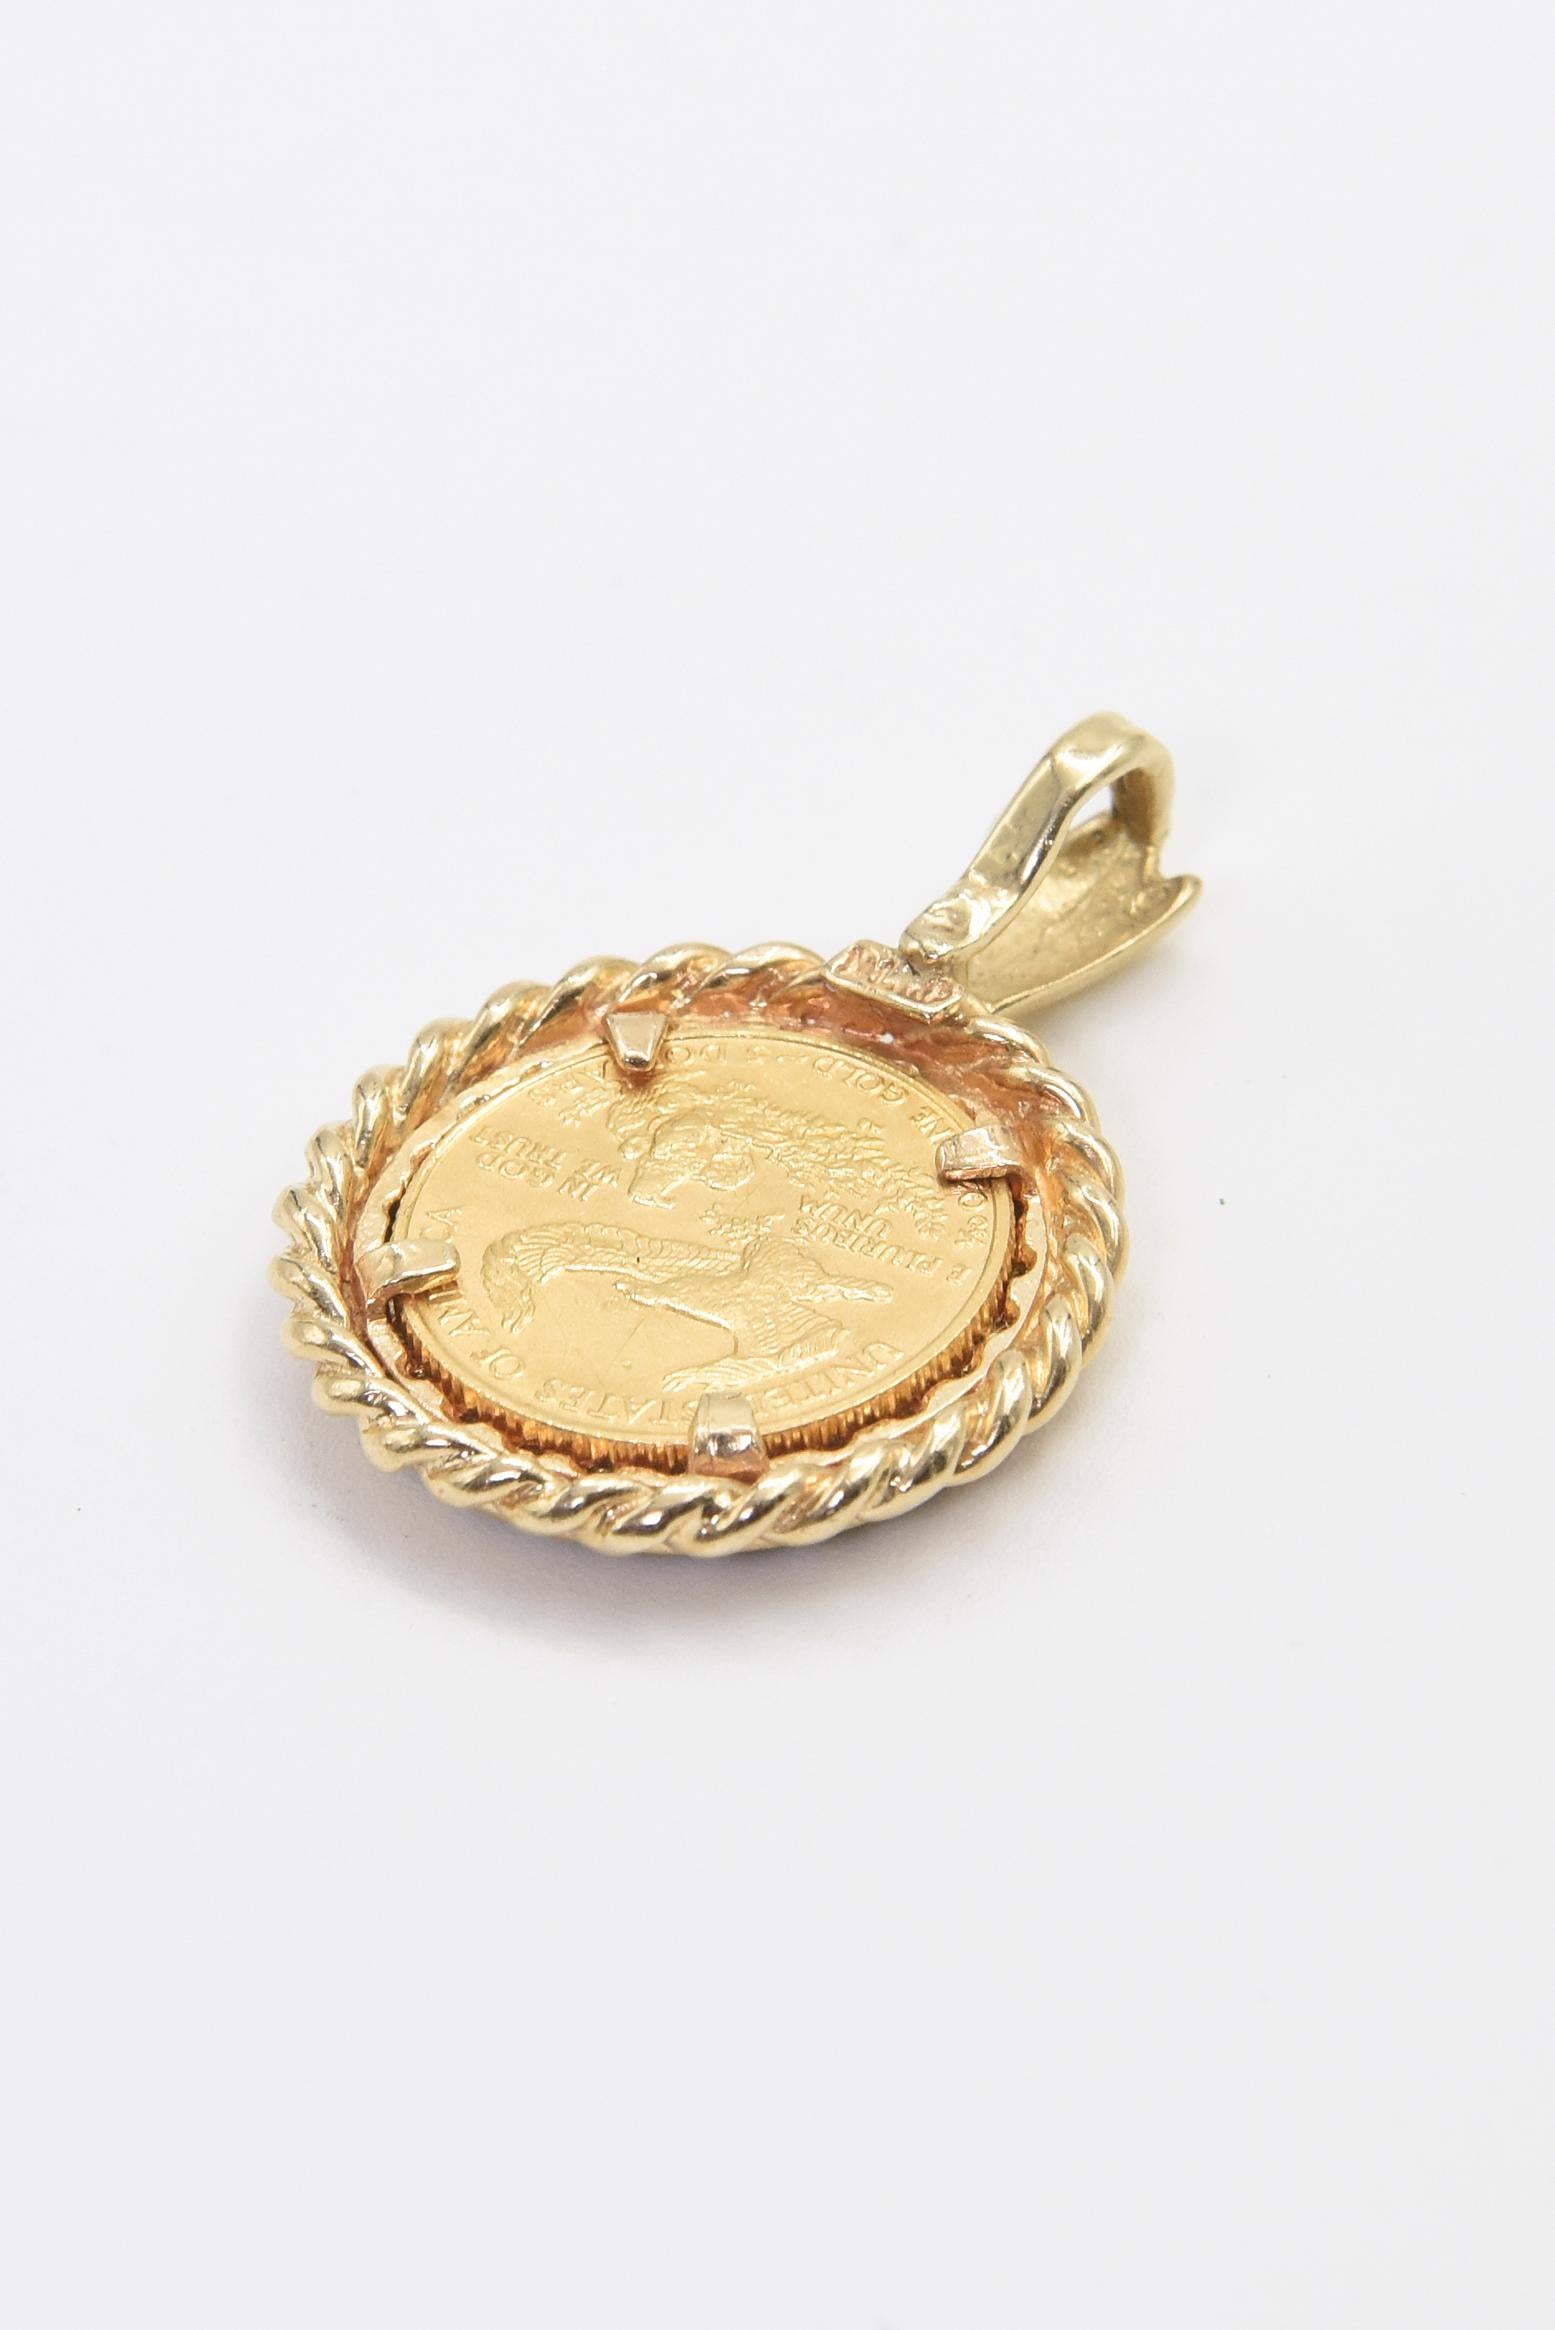 Women's or Men's US Liberty Coin Diamond Necklace Gold Pendant Charm